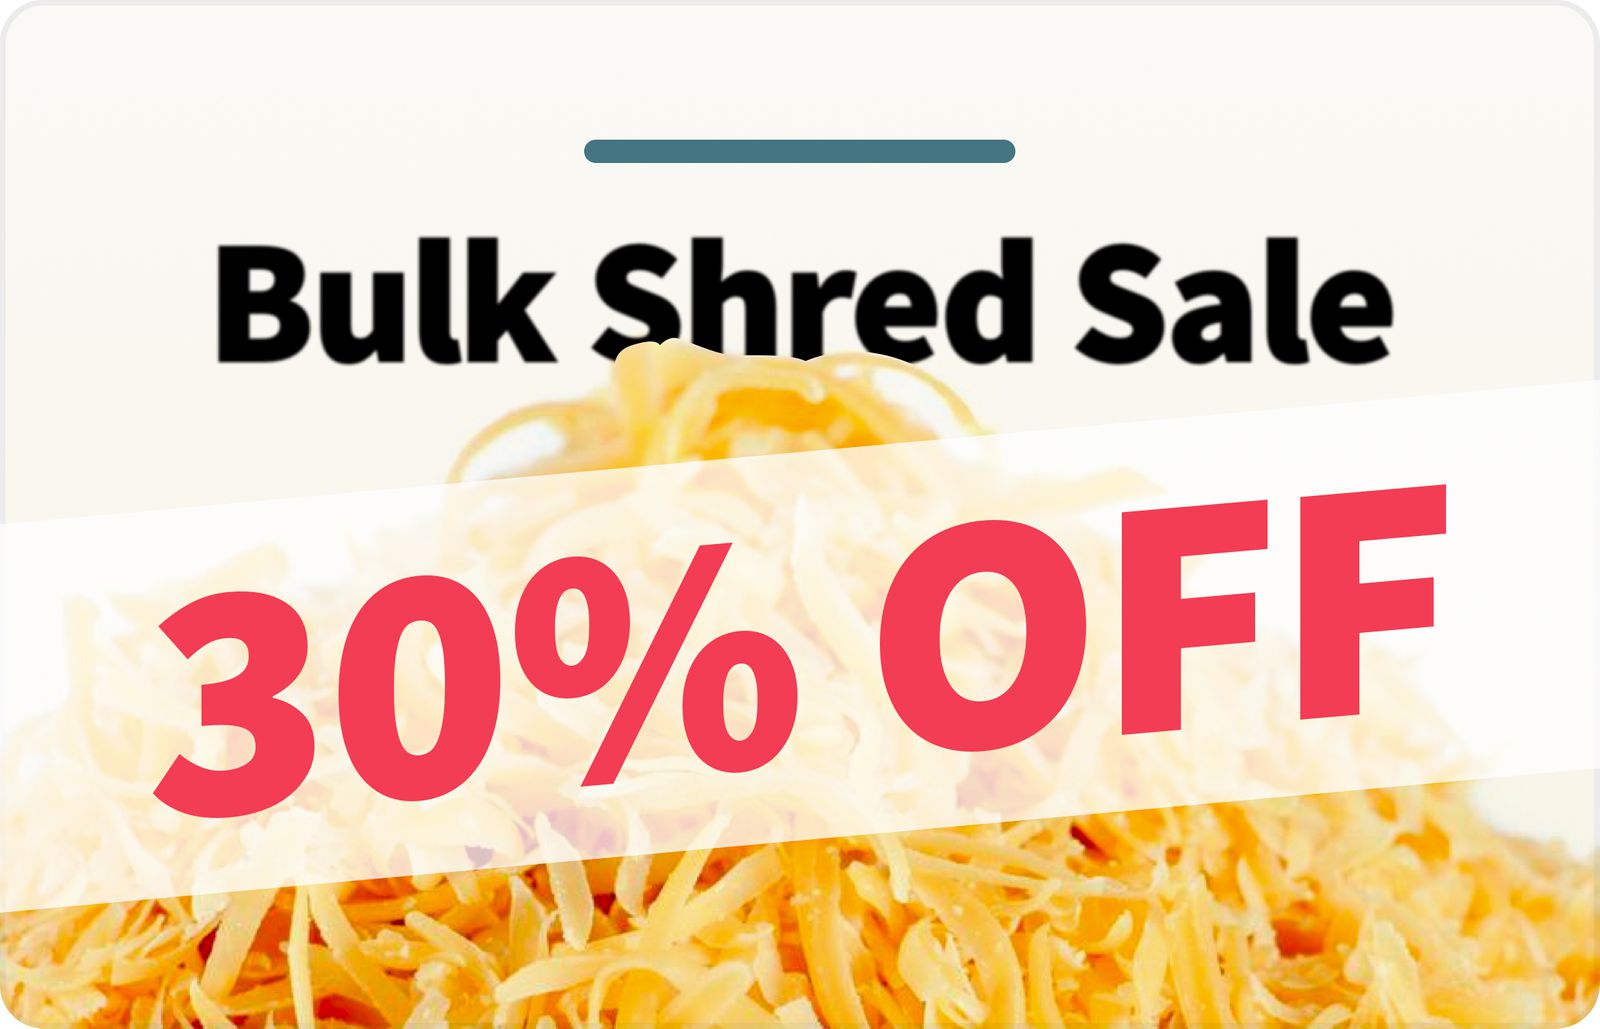 Bulk Shred Sale - 30% OFF!